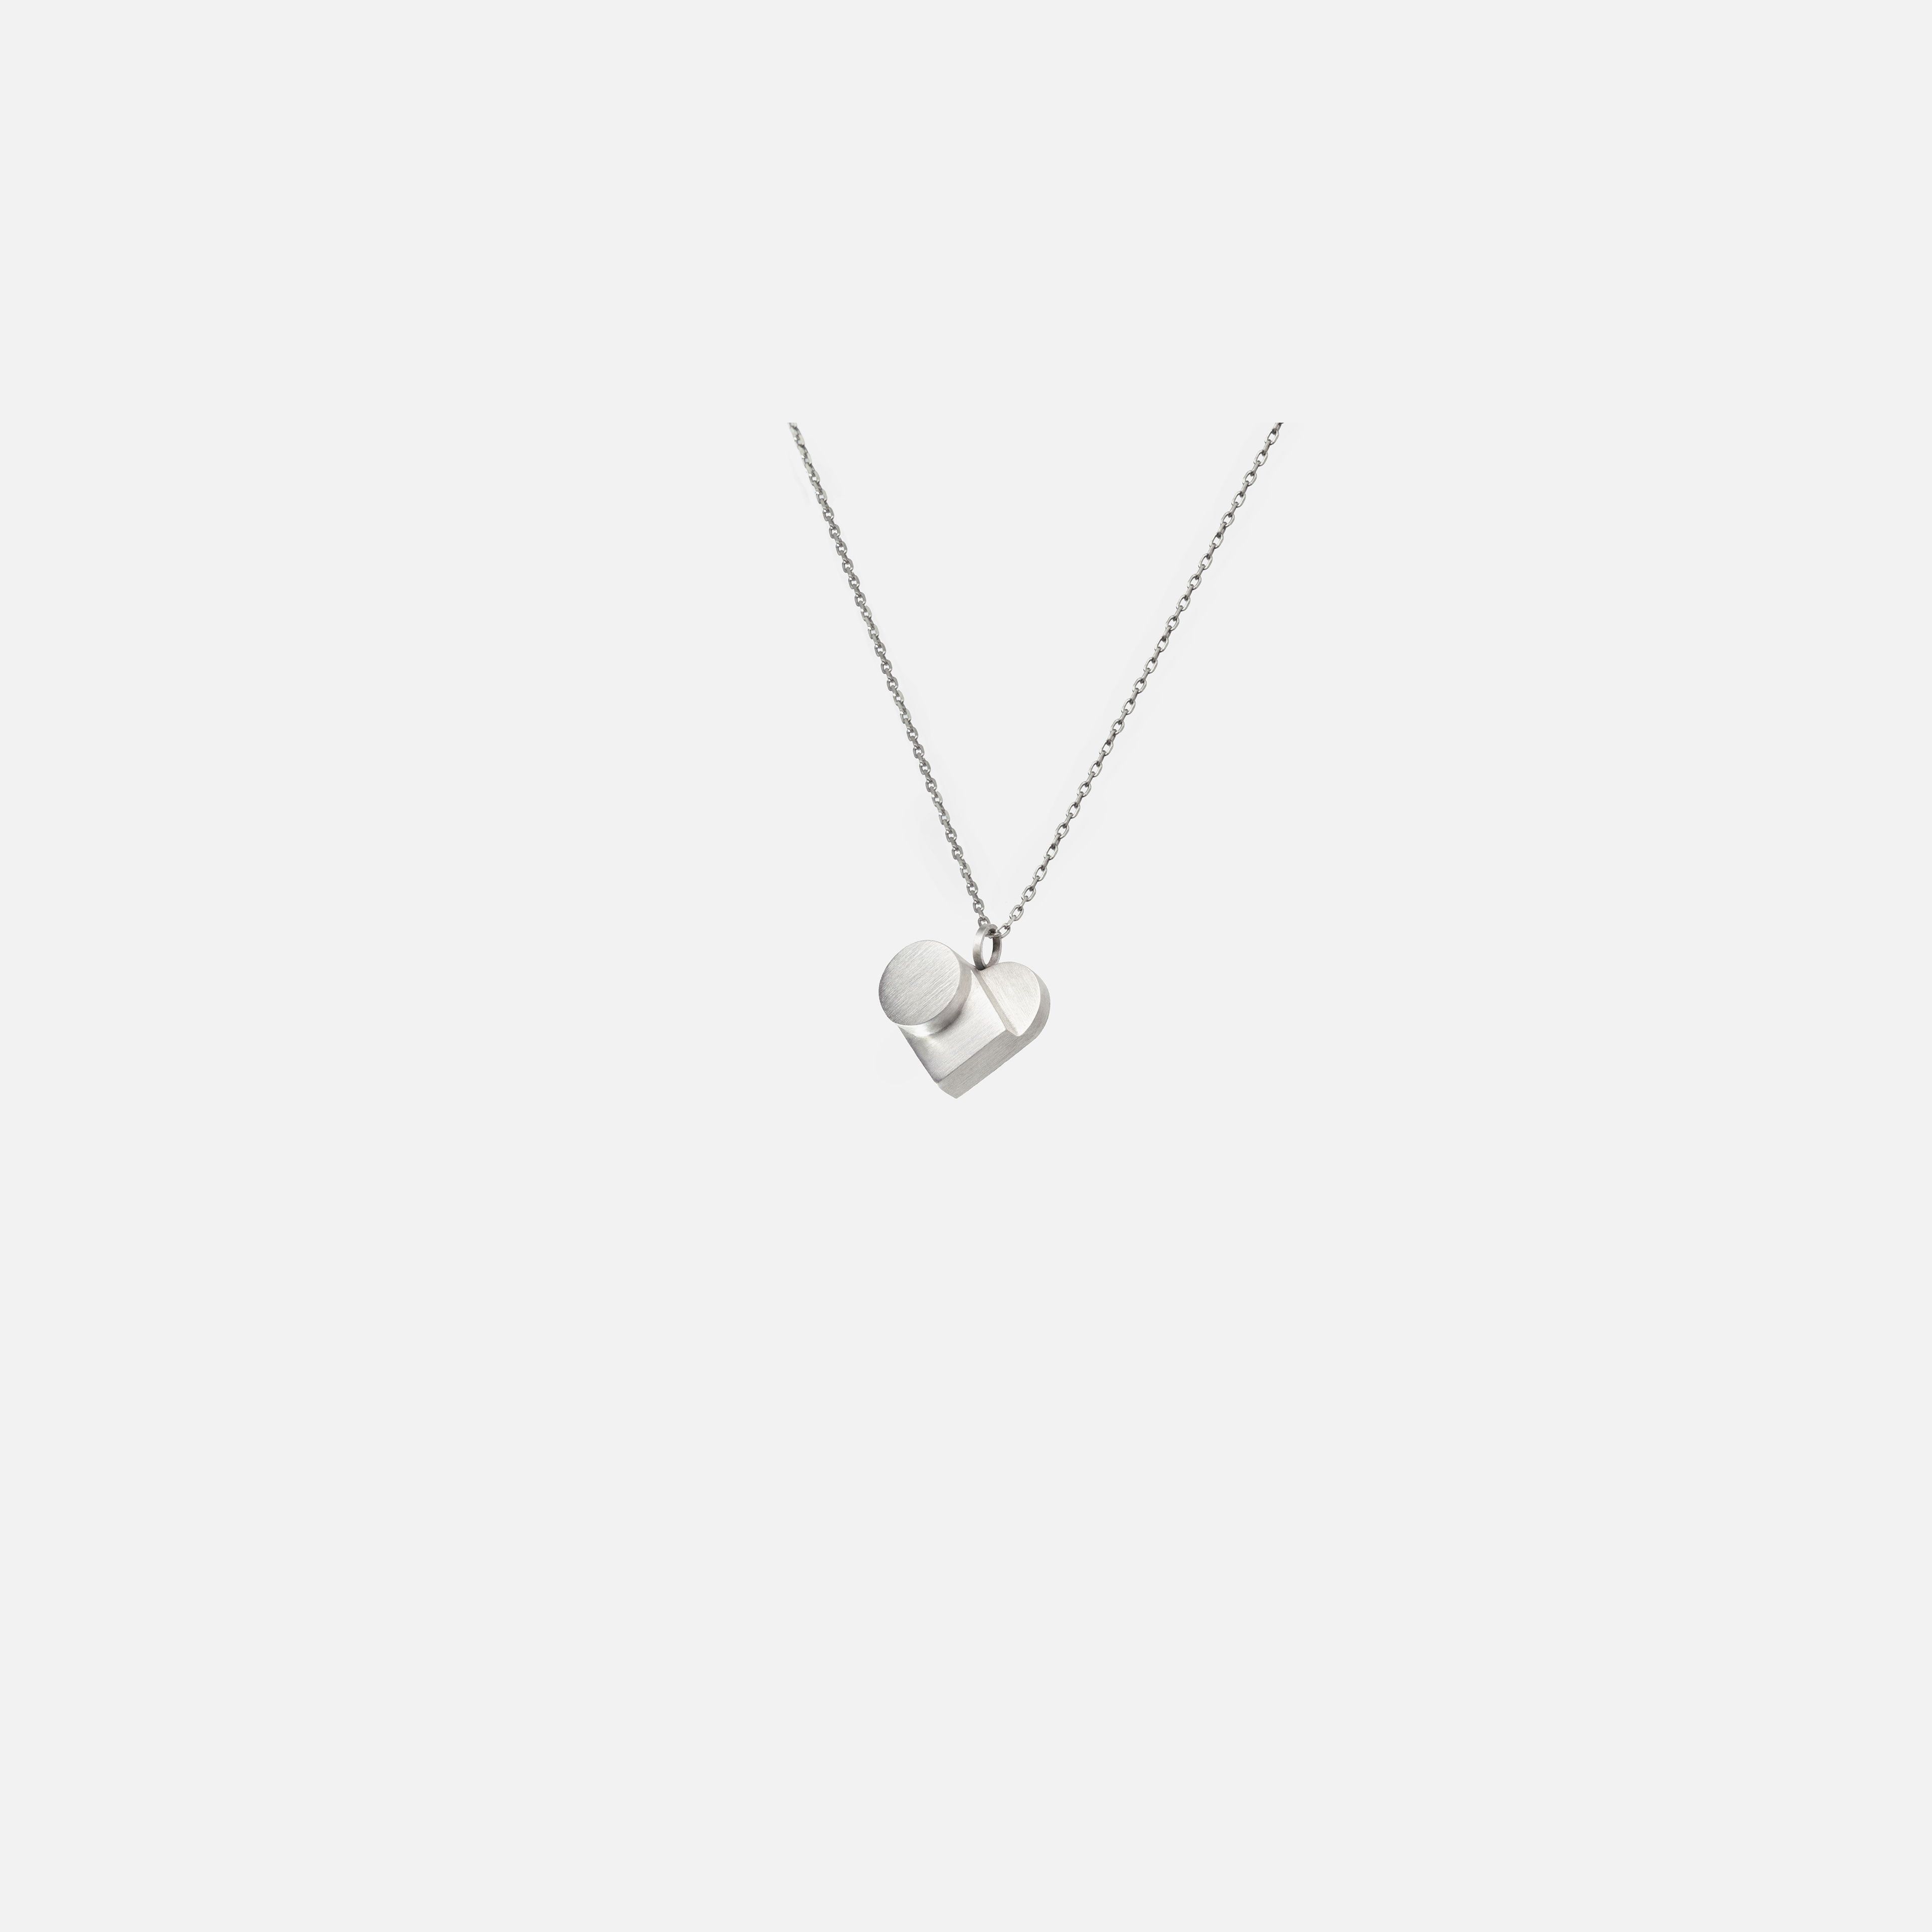 Luv925 Silver Necklace